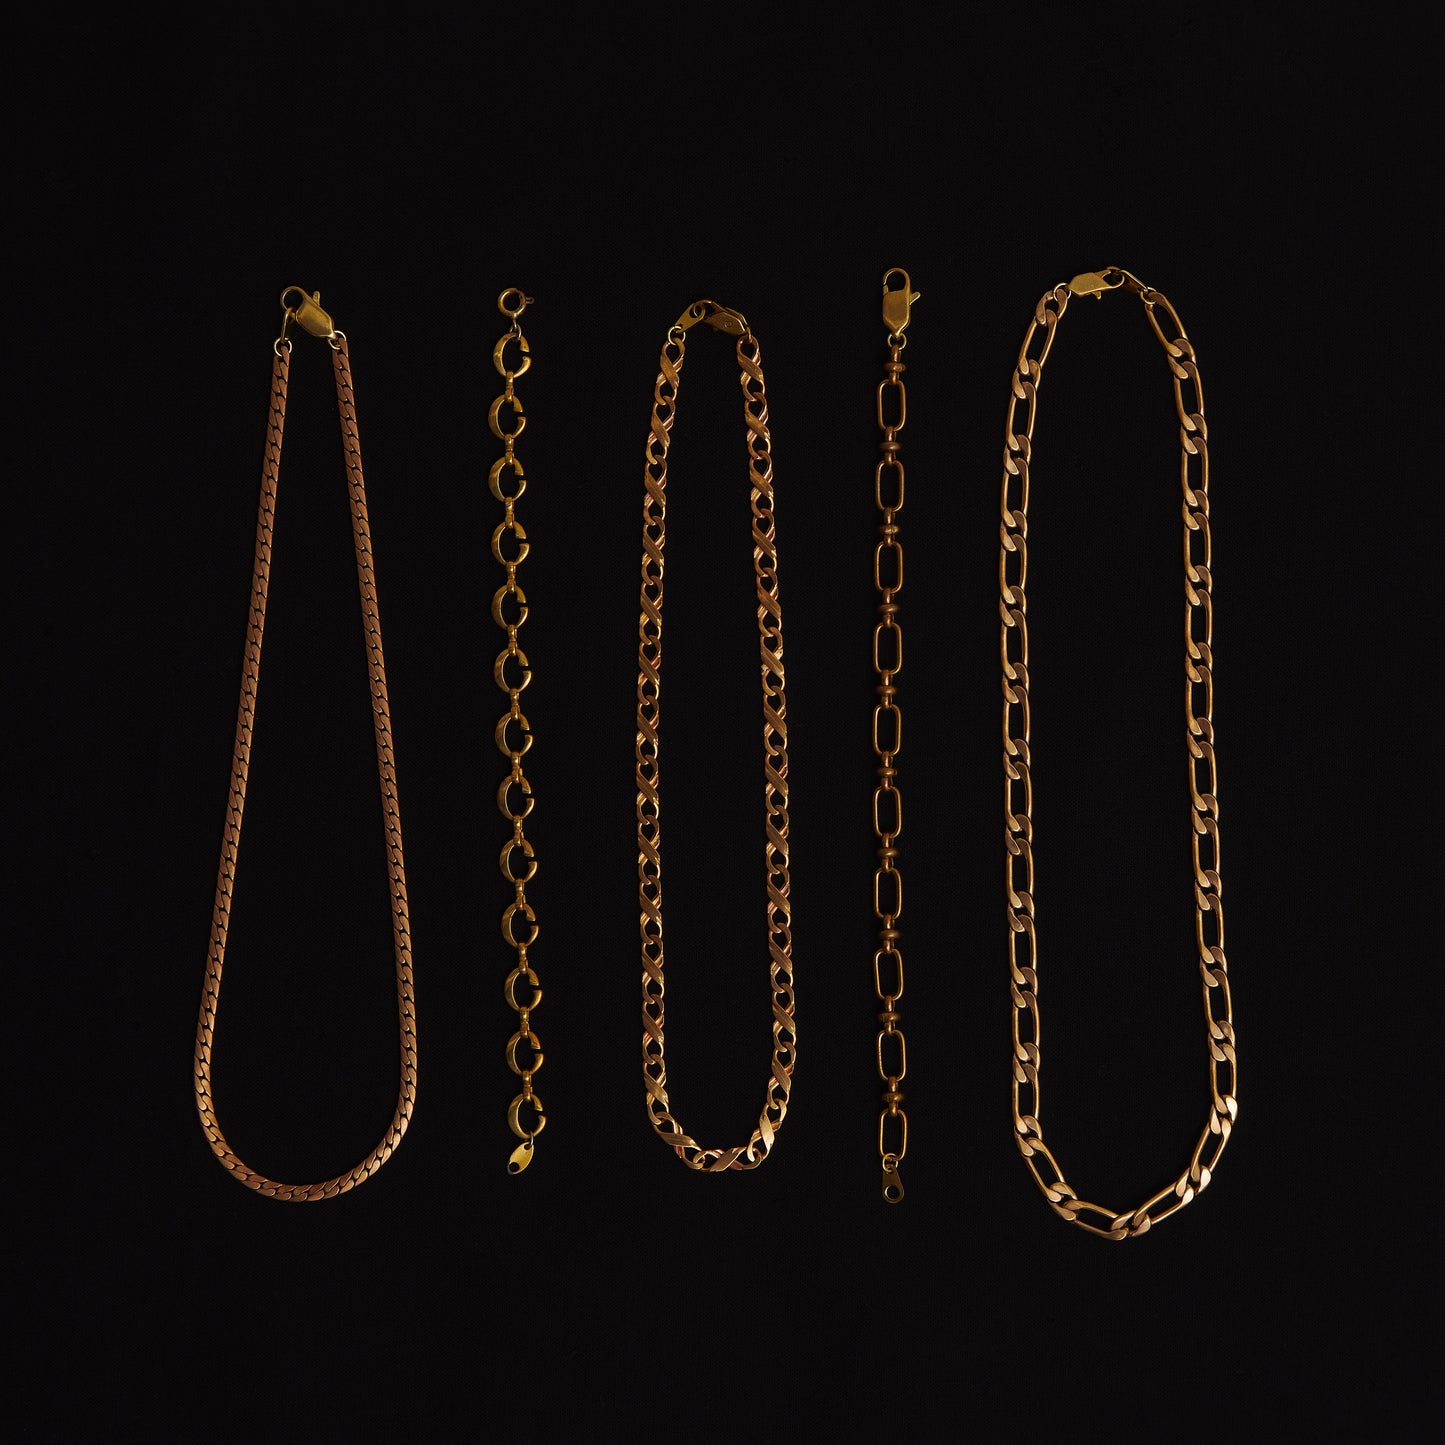 50 Vintage Curb Chain Necklace